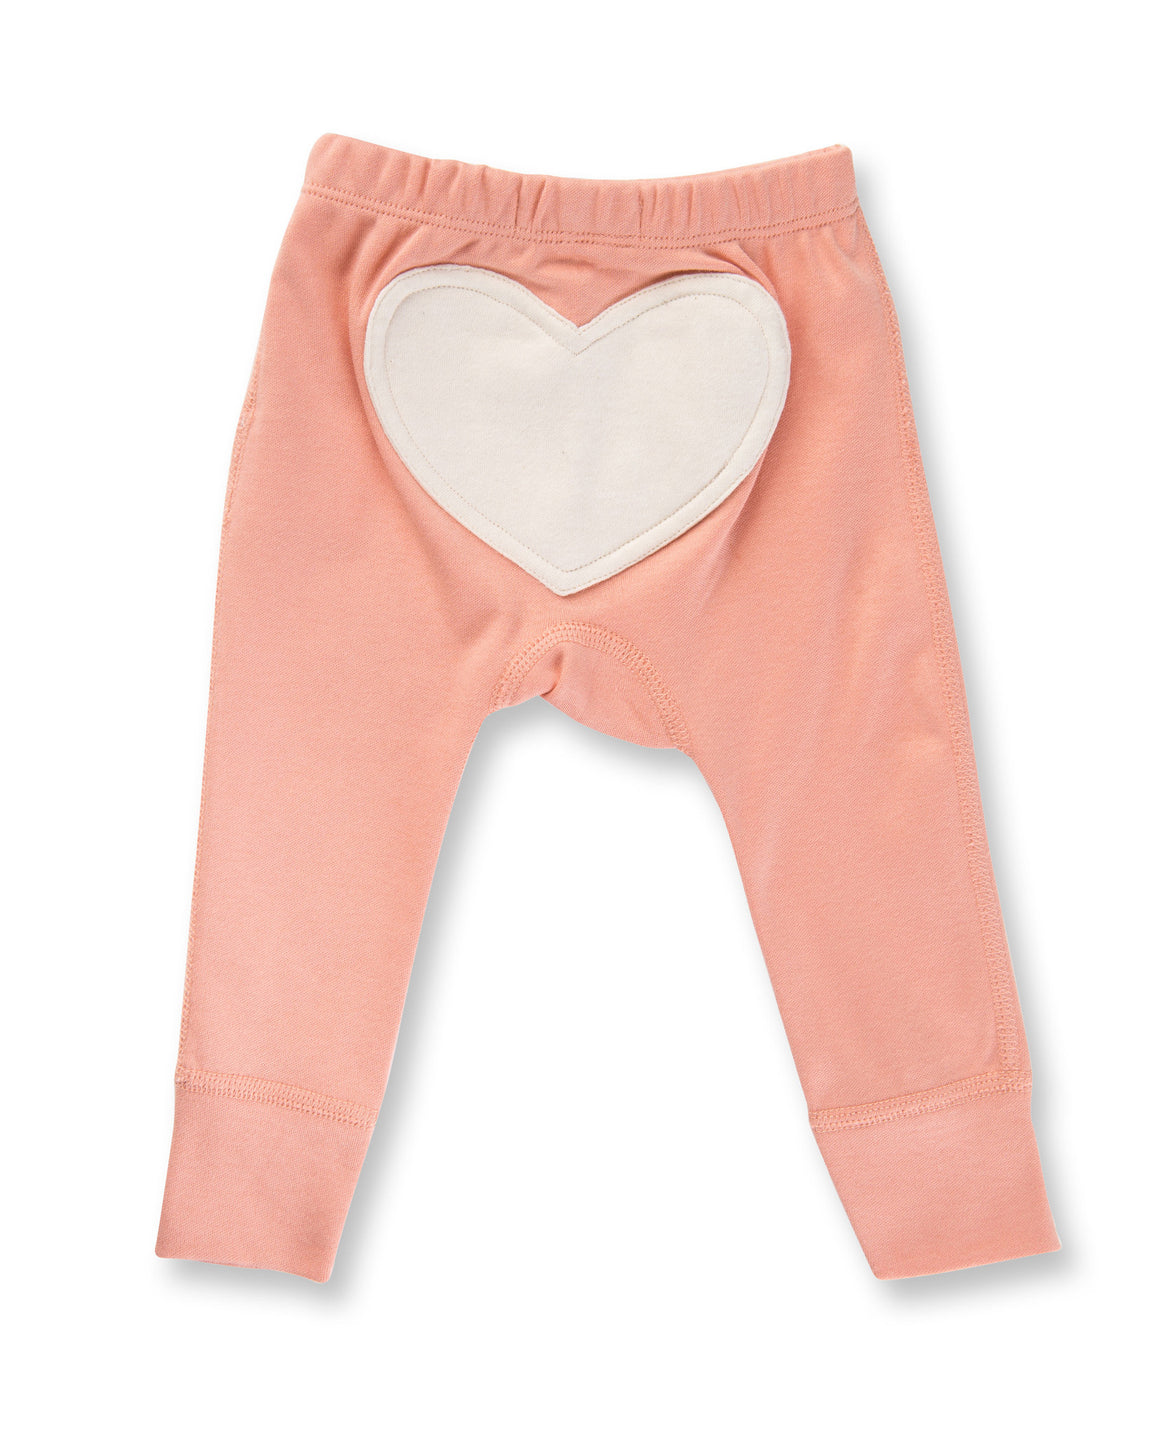 Heart Pants by Sapling Child - Peach Blossom